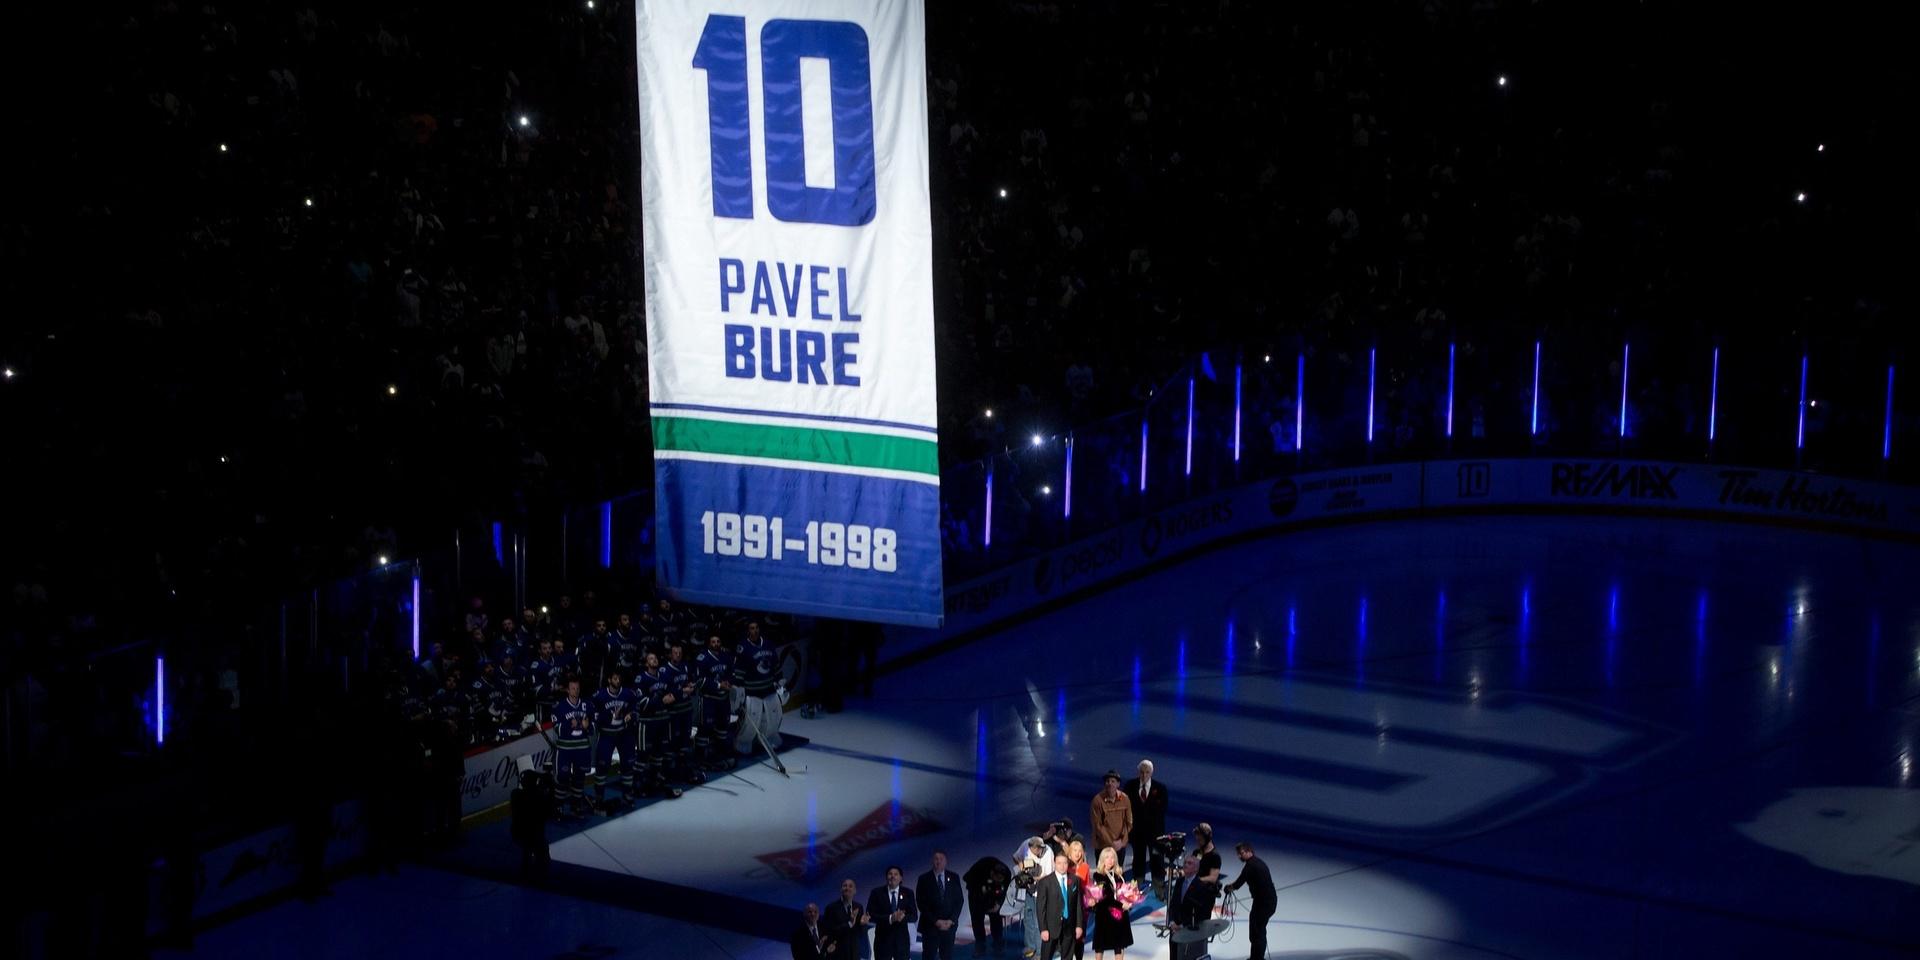 Nummer tio, Pavel Bures nummer, är odödligt i Vancouver – och på Lars Lindbergs häl. 